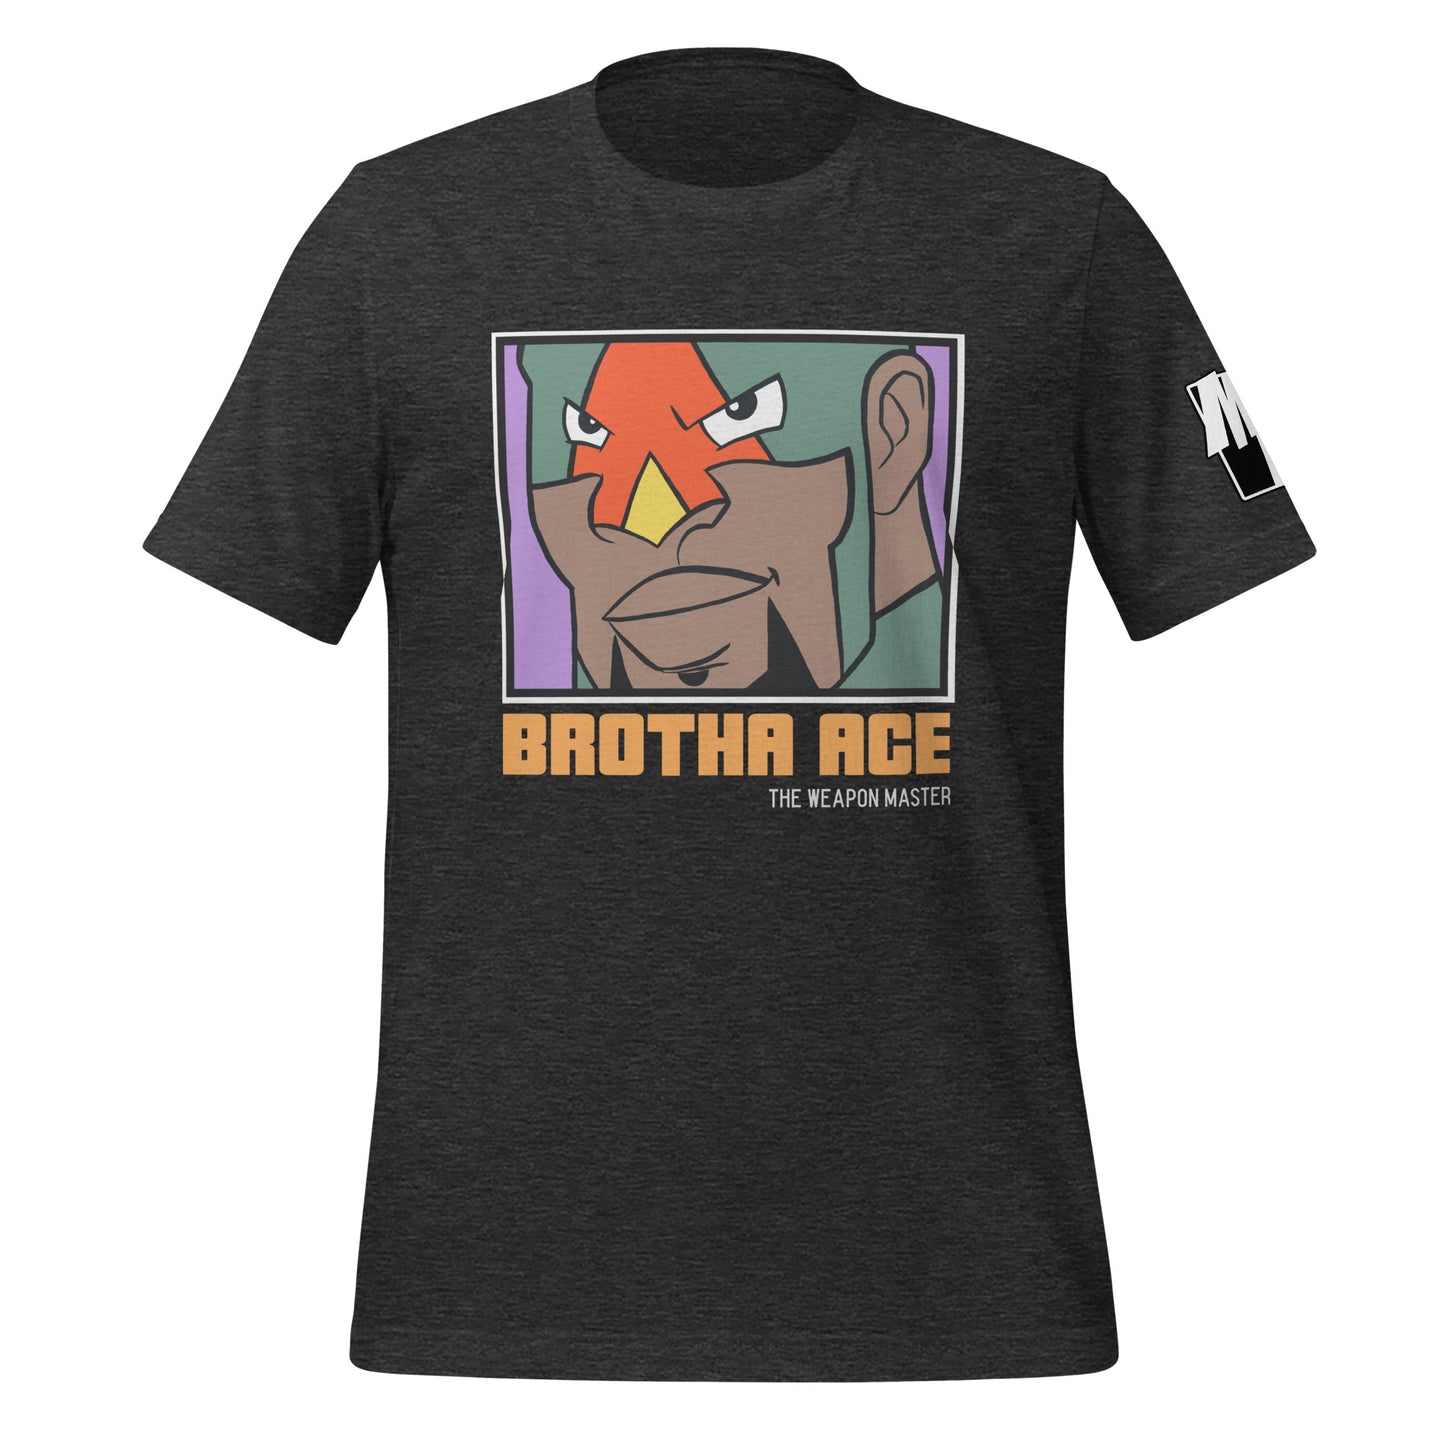 BIG BROTHA ACE (THE WEAPON MASTER) T-Shirt